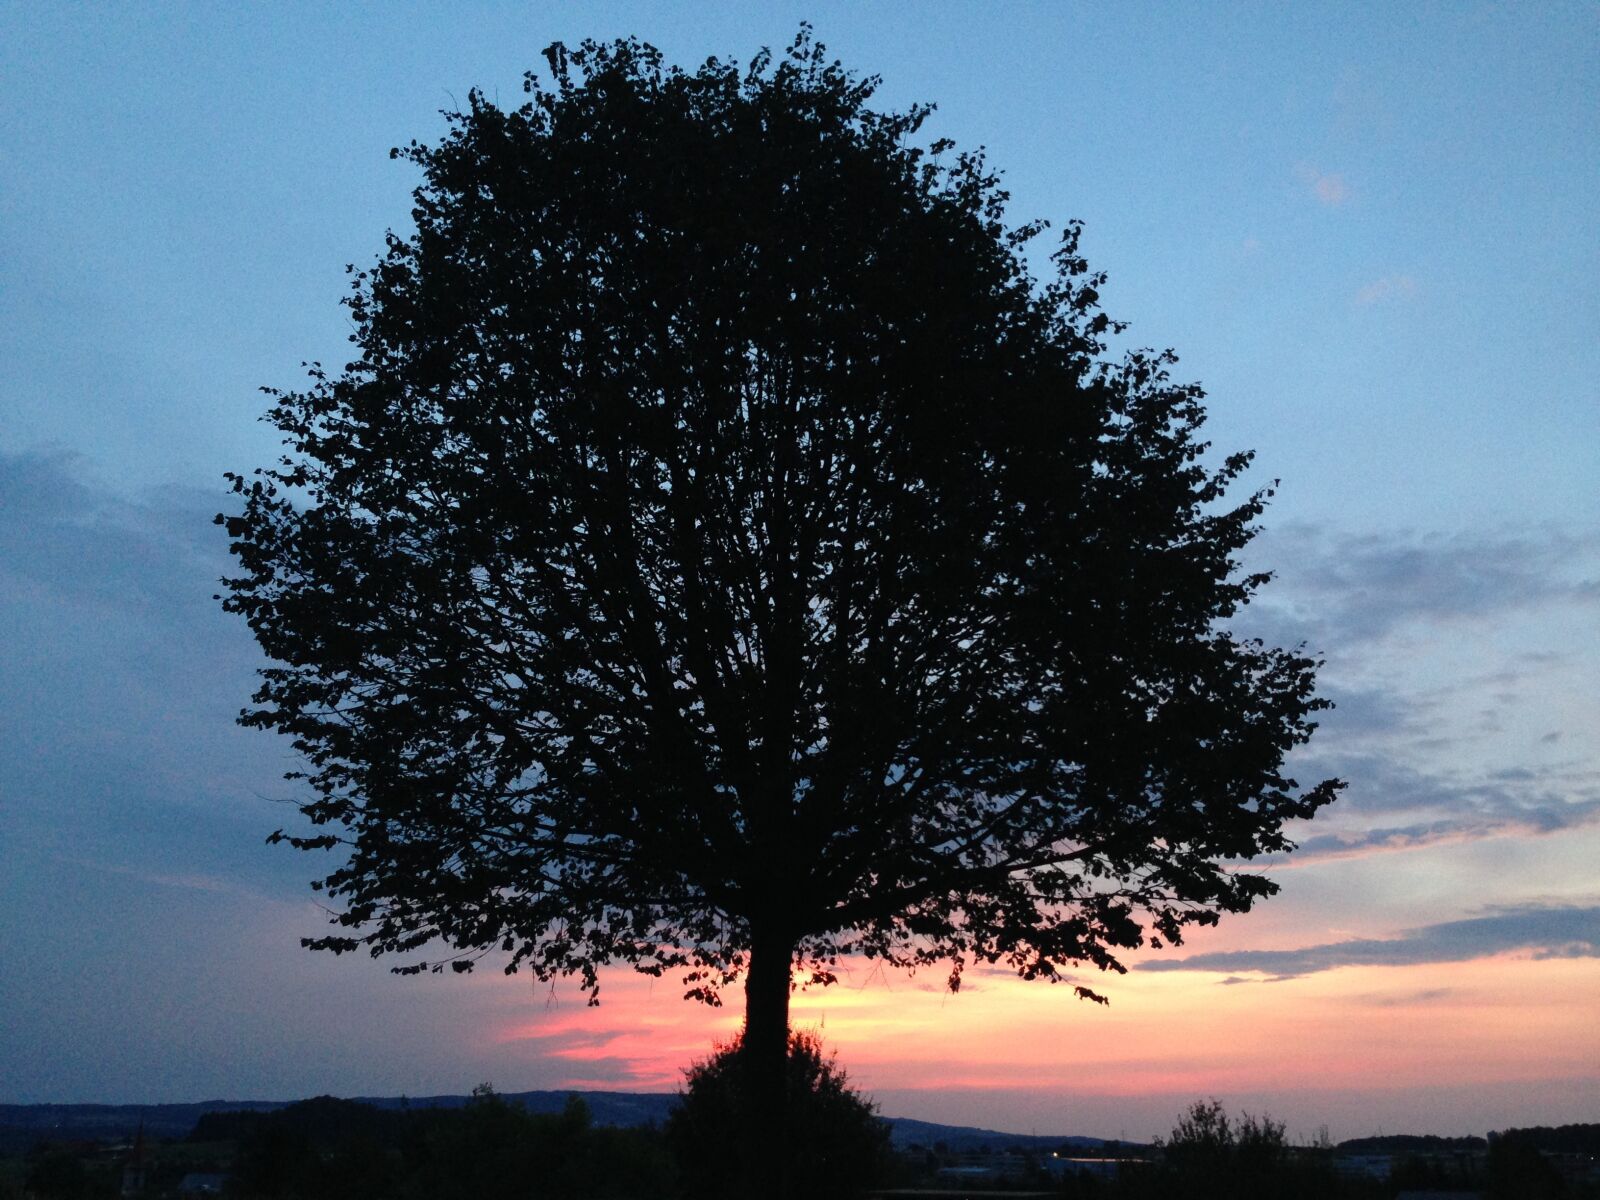 Apple iPhone 5 + iPhone 5 back camera 33mm f/2.4 sample photo. Nature, tree, sunset photography